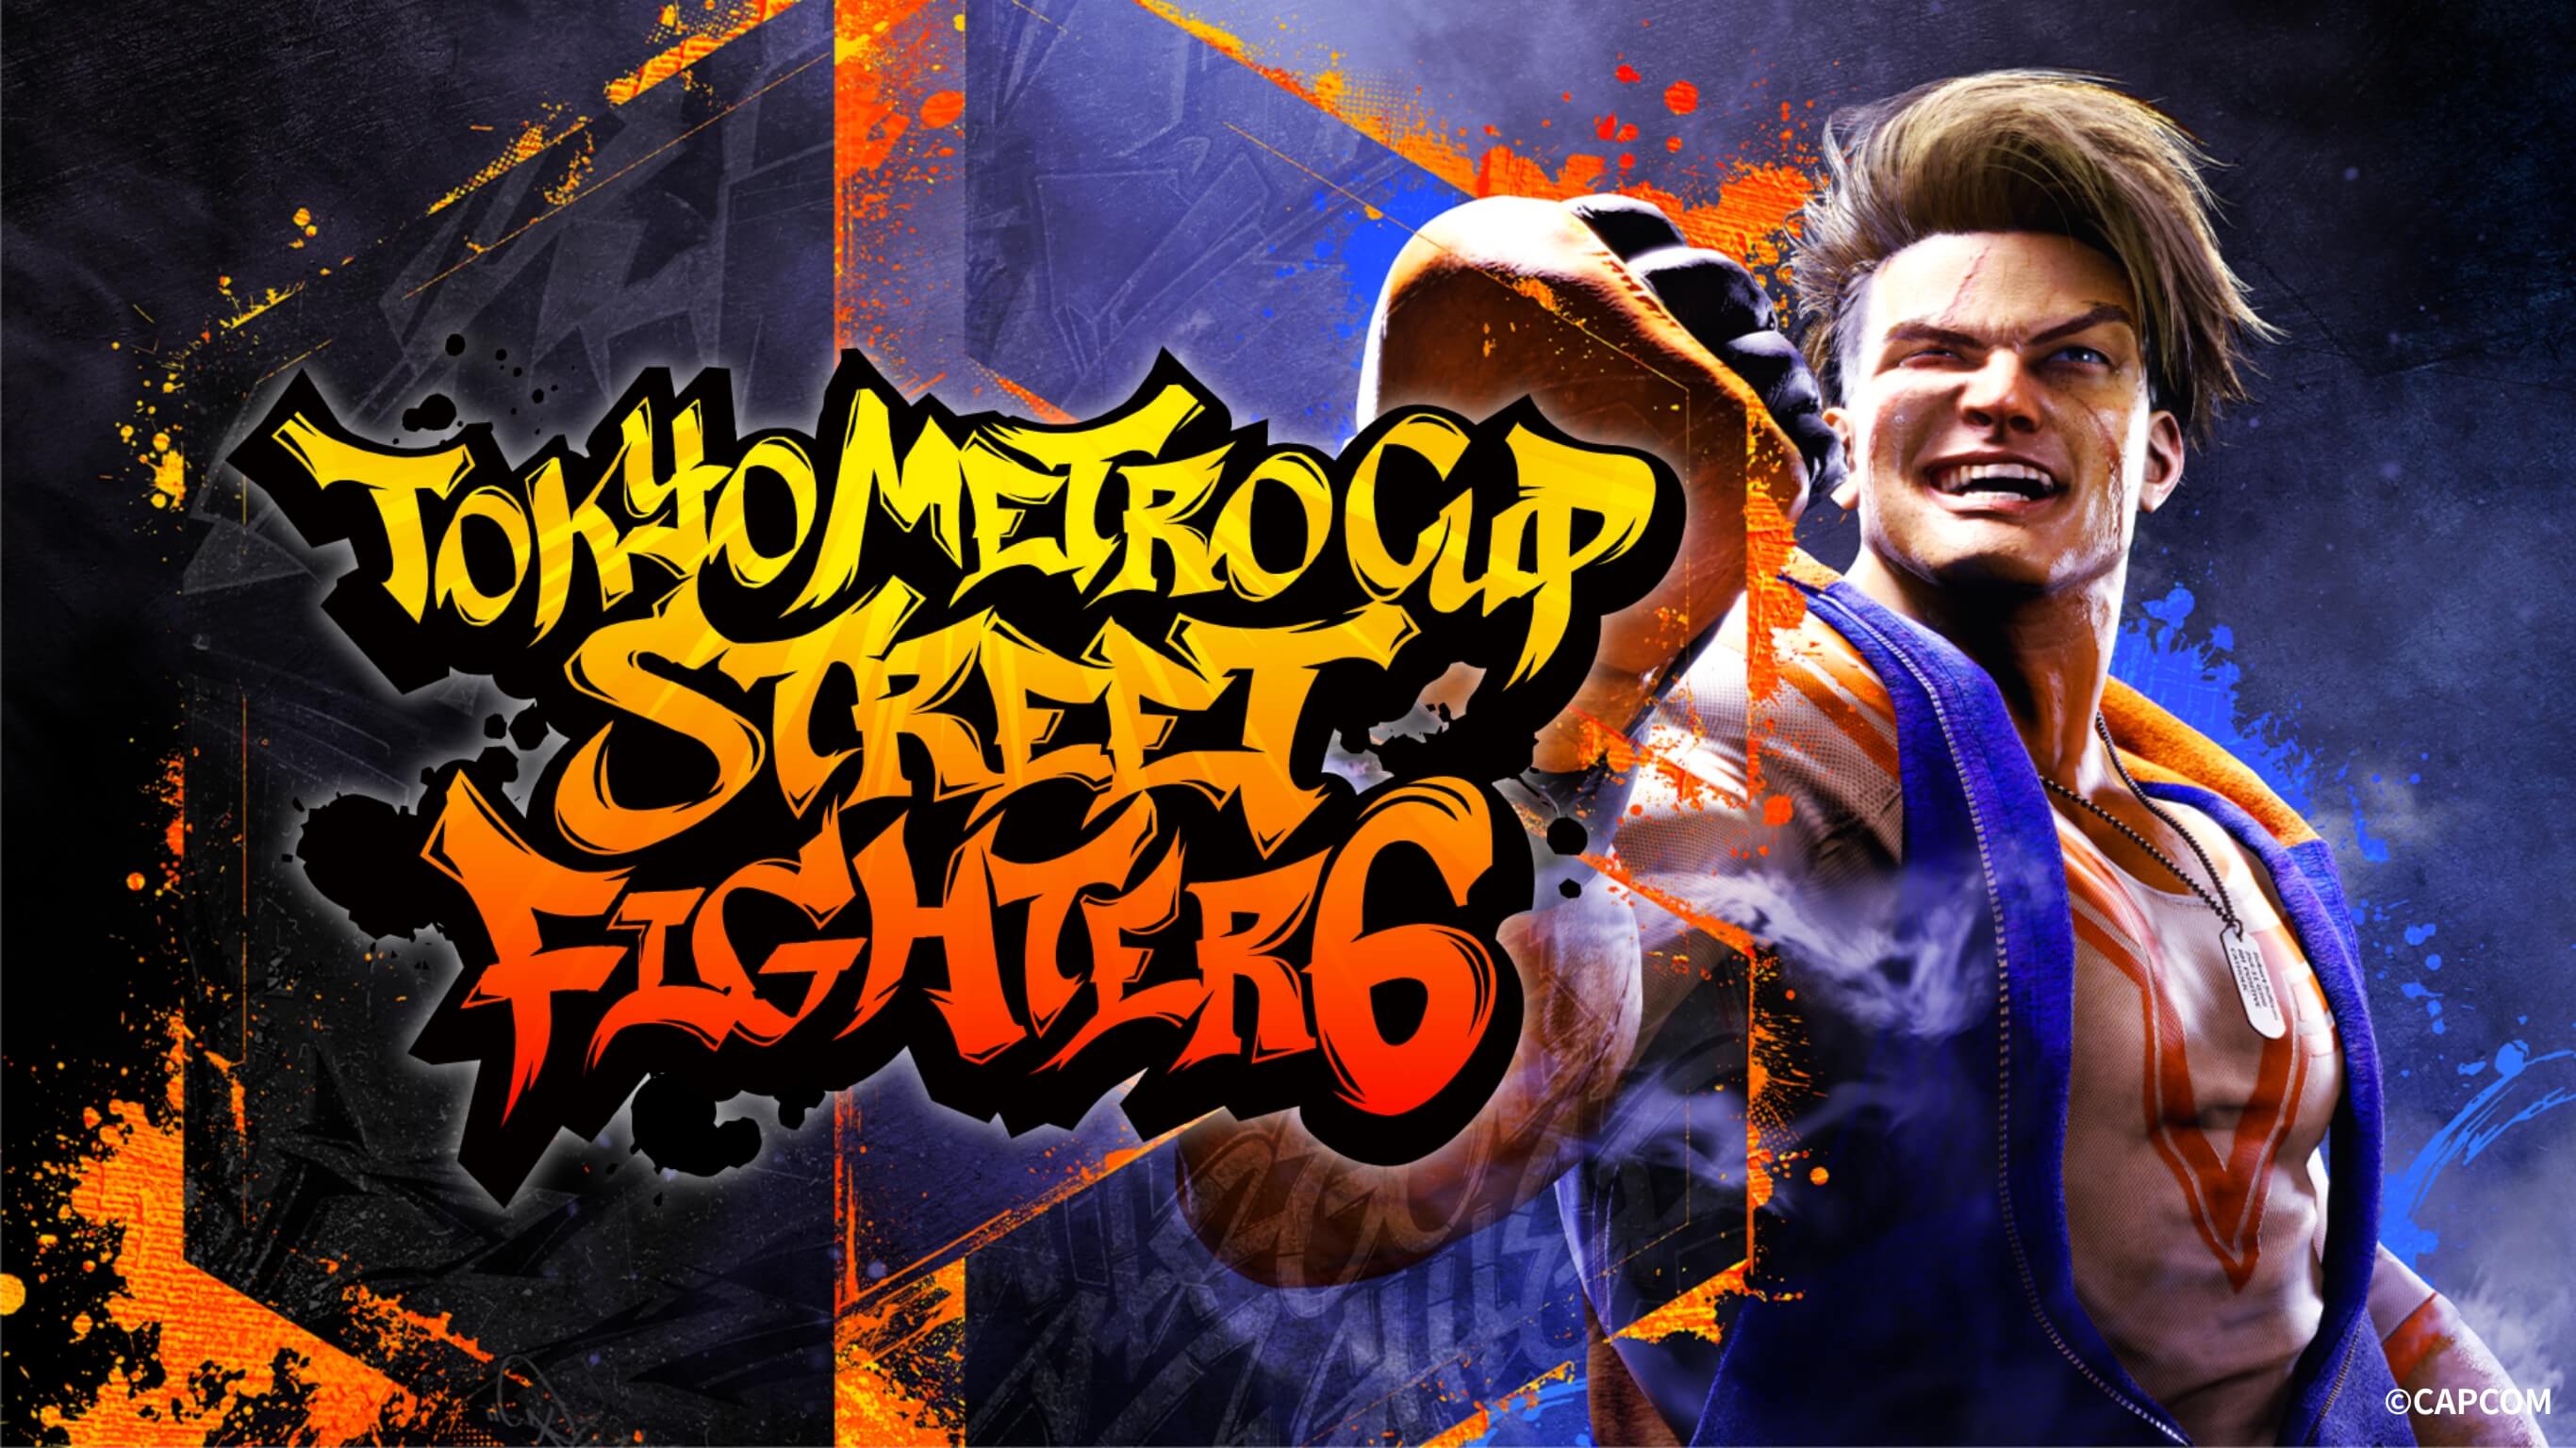 TOKYO METRO CUP STREET FIGHTER 6